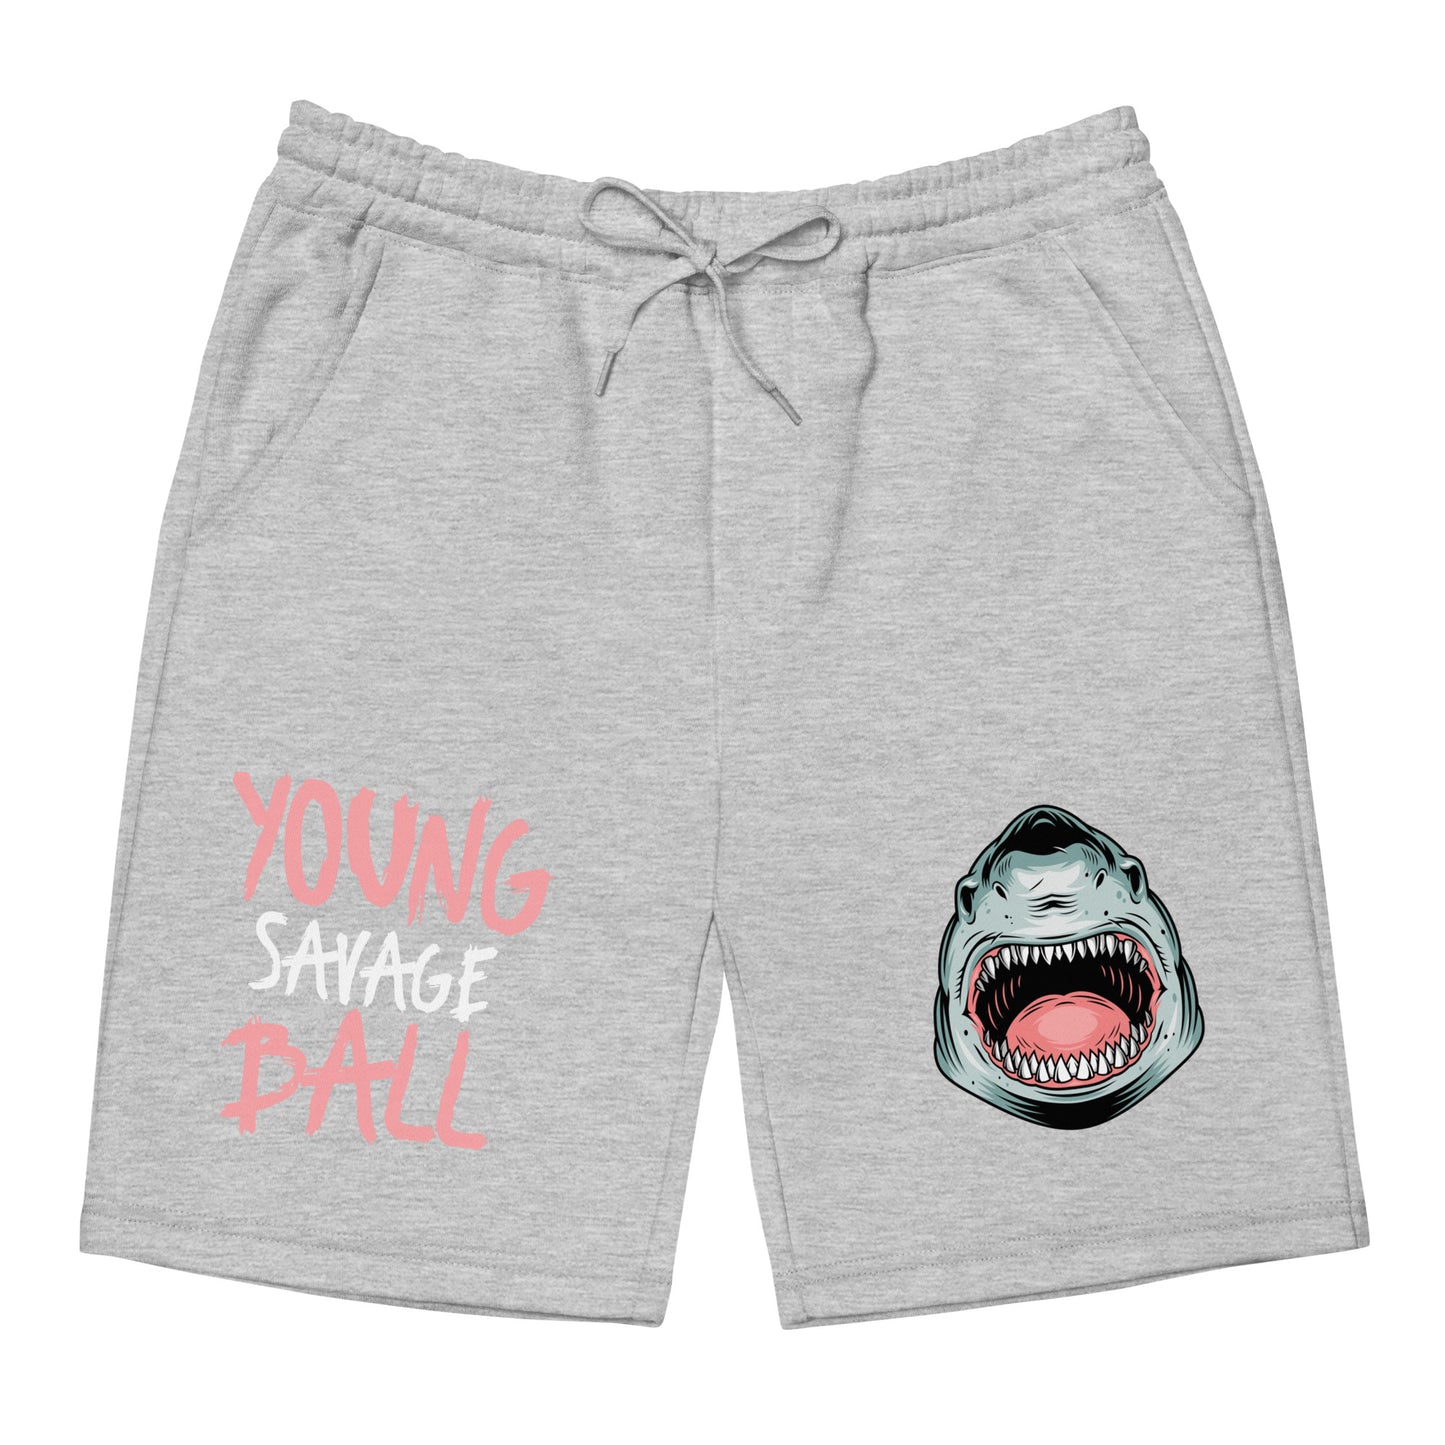 Game Time - Shark Basketball fleece shorts